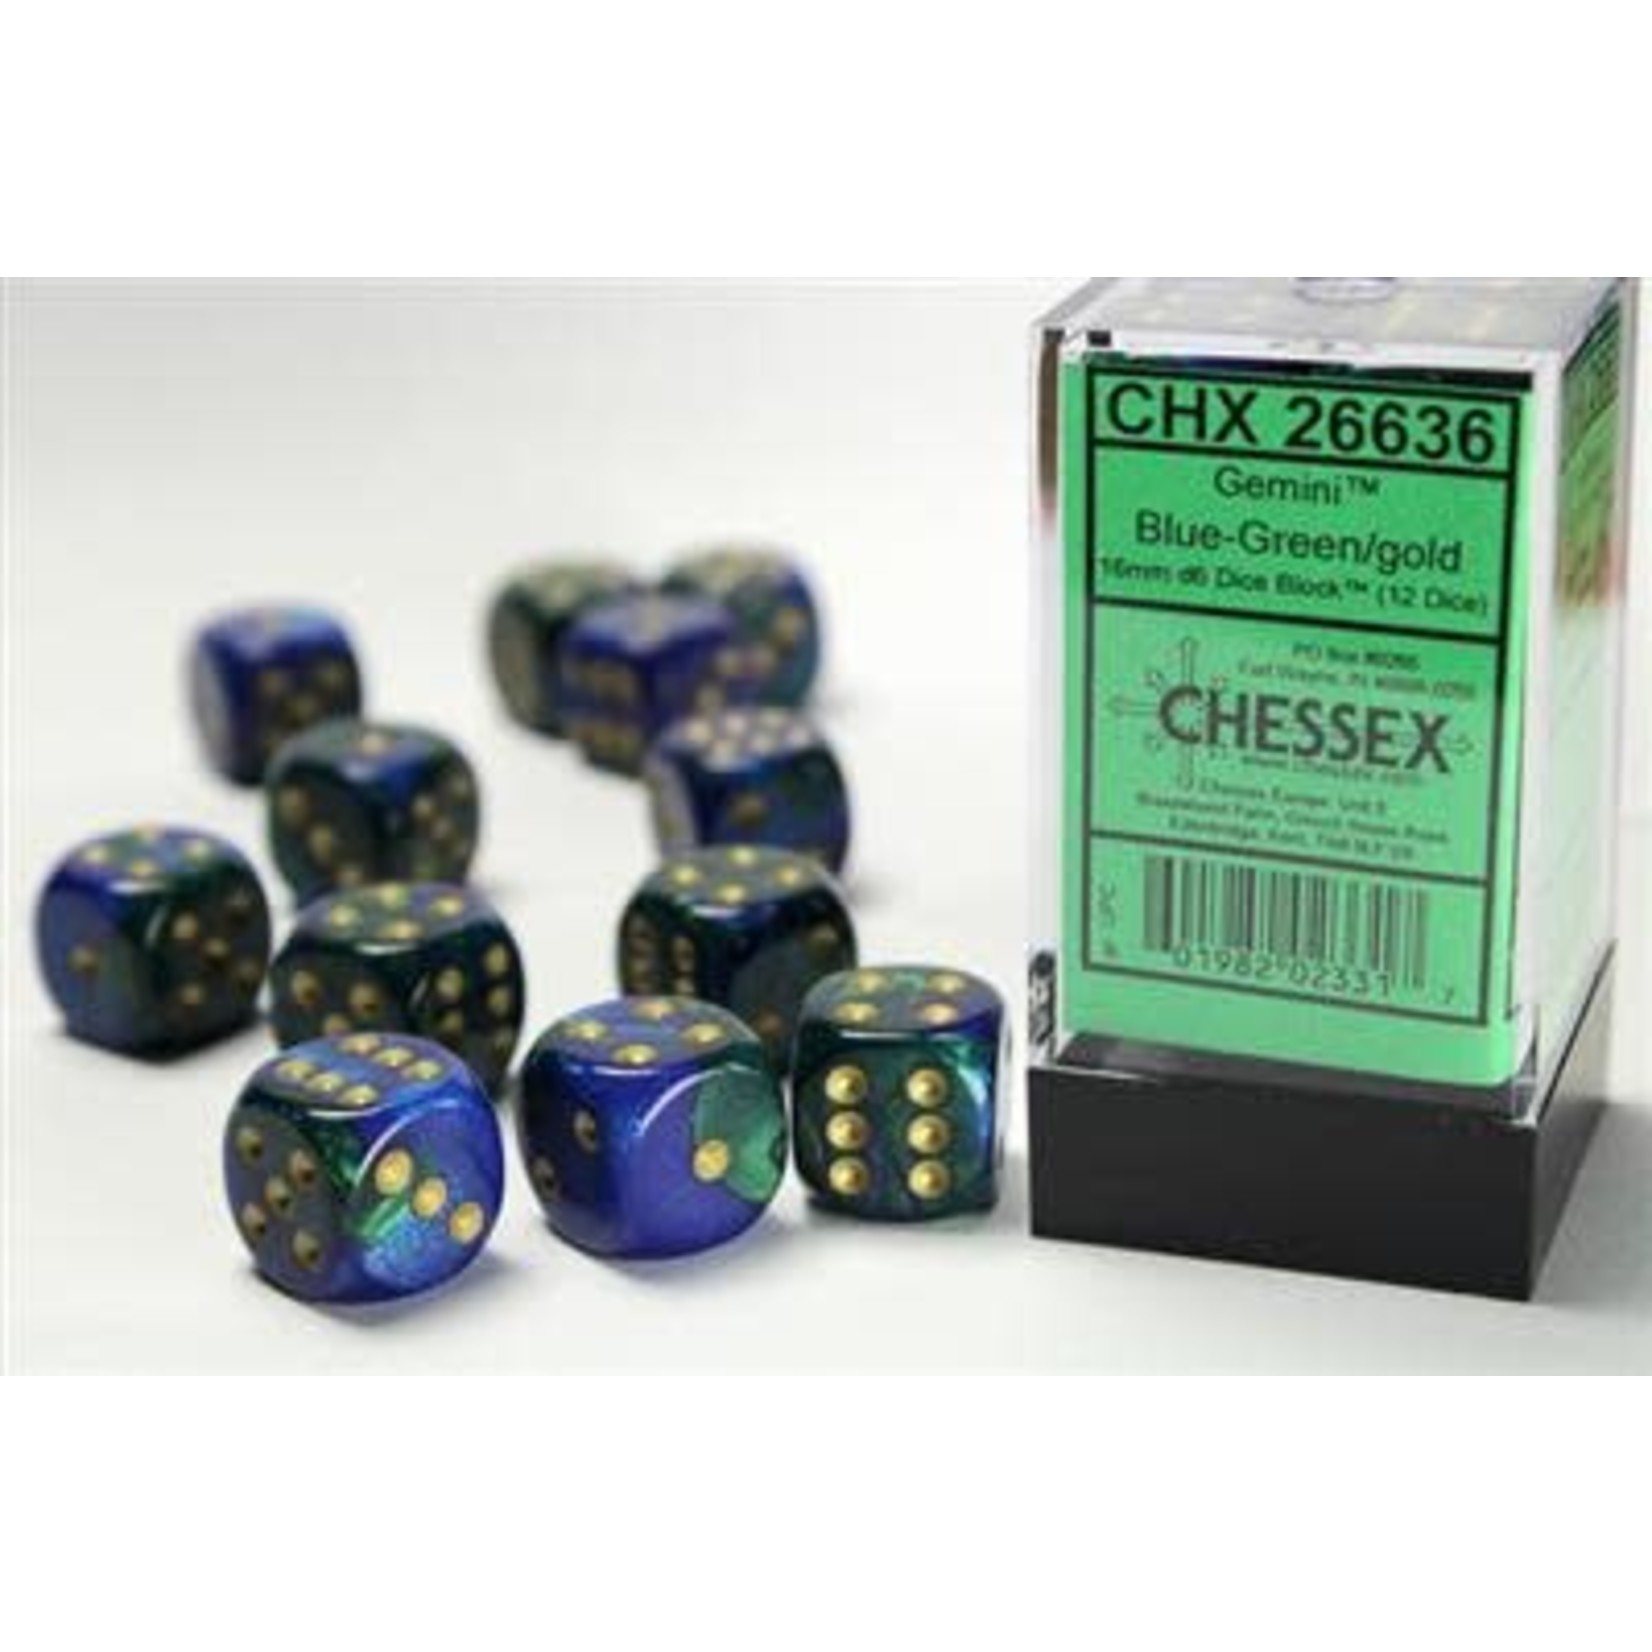 Chessex Gemini 16mm d6 Blue-Green/Gold (12)